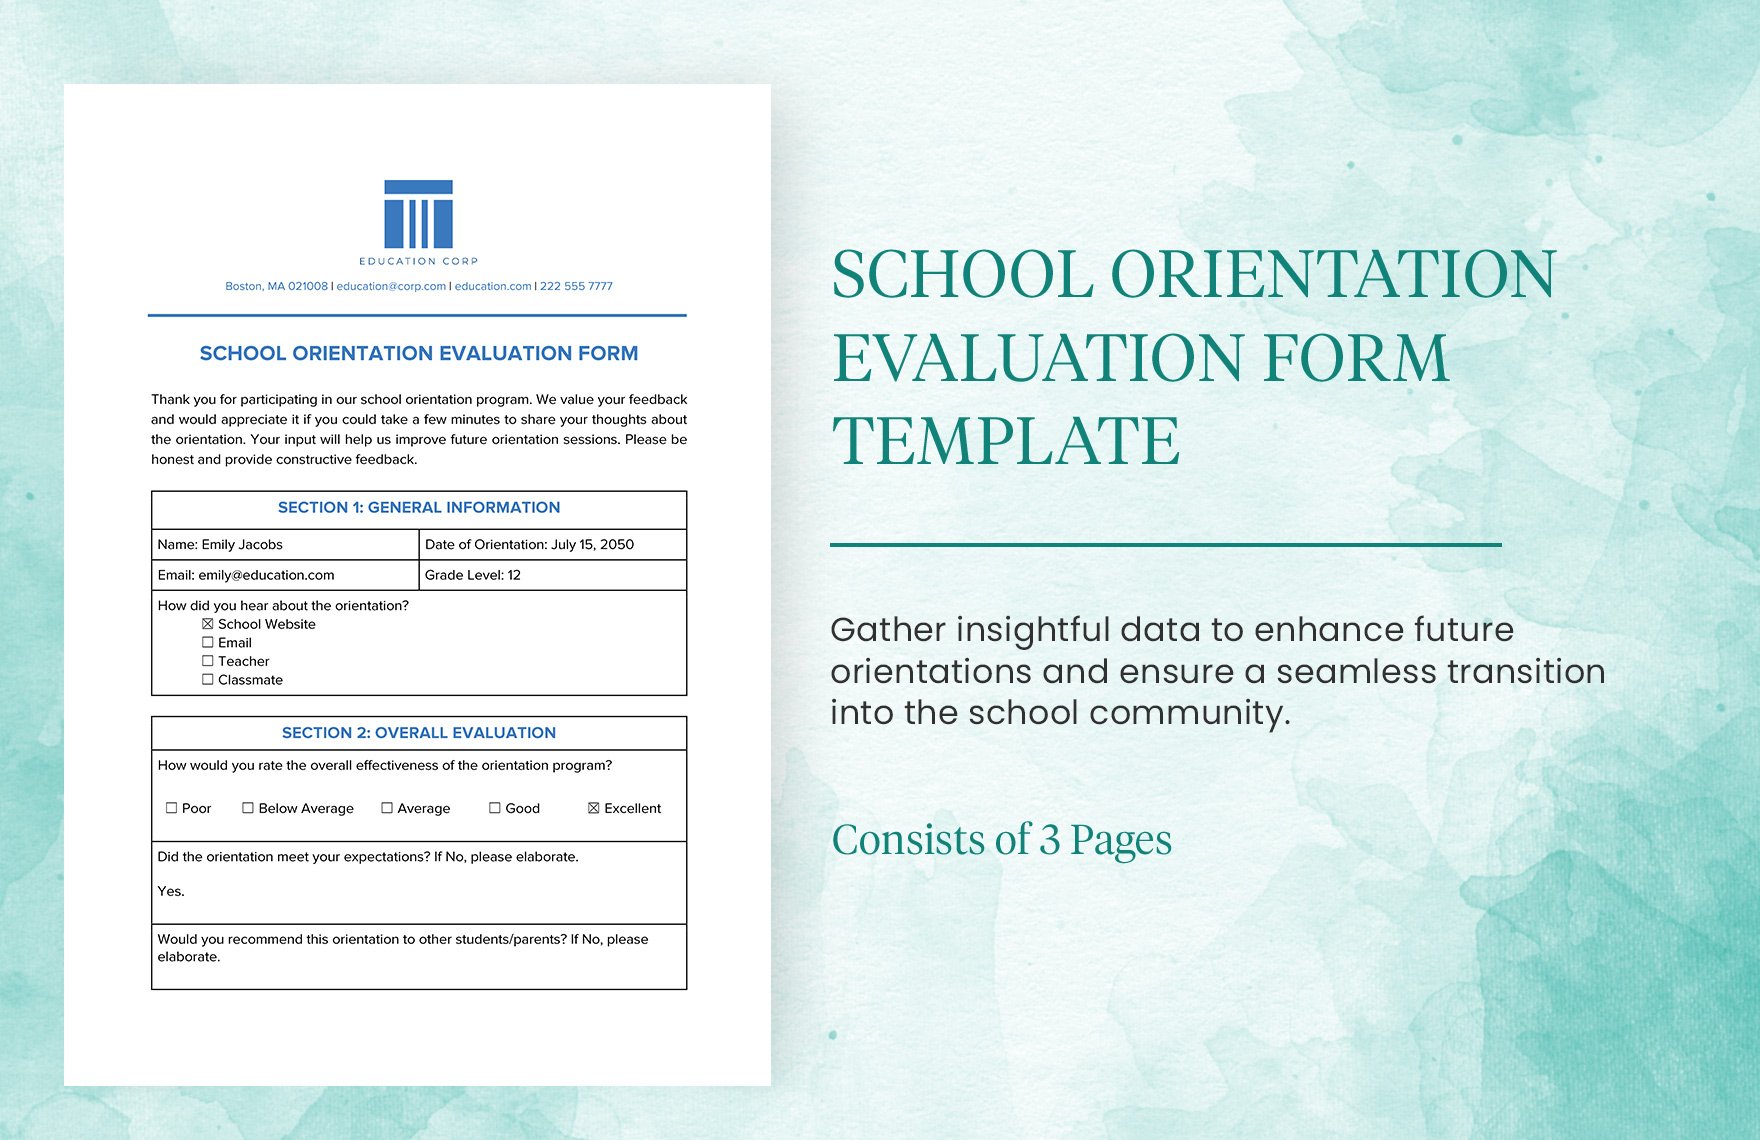 School Orientation Evaluation Form Template in Word, Google Docs, PDF